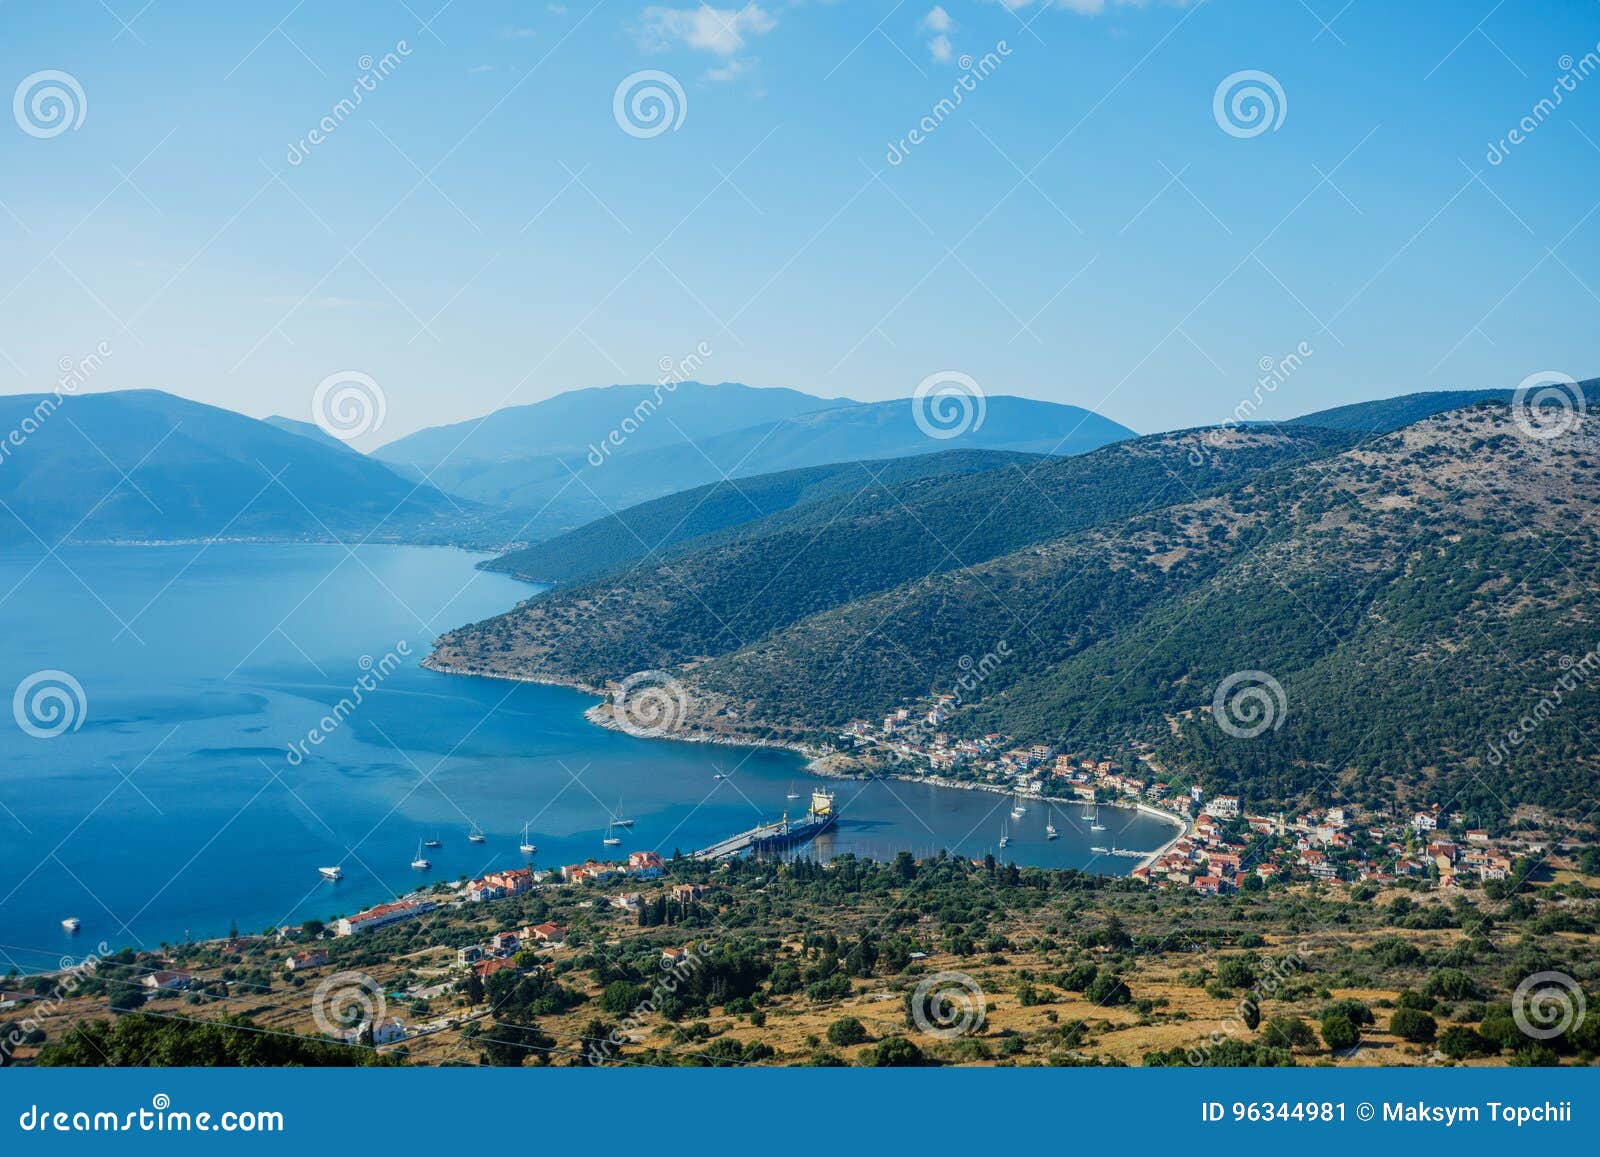 the island of kefalonia, ionian sea, greece.